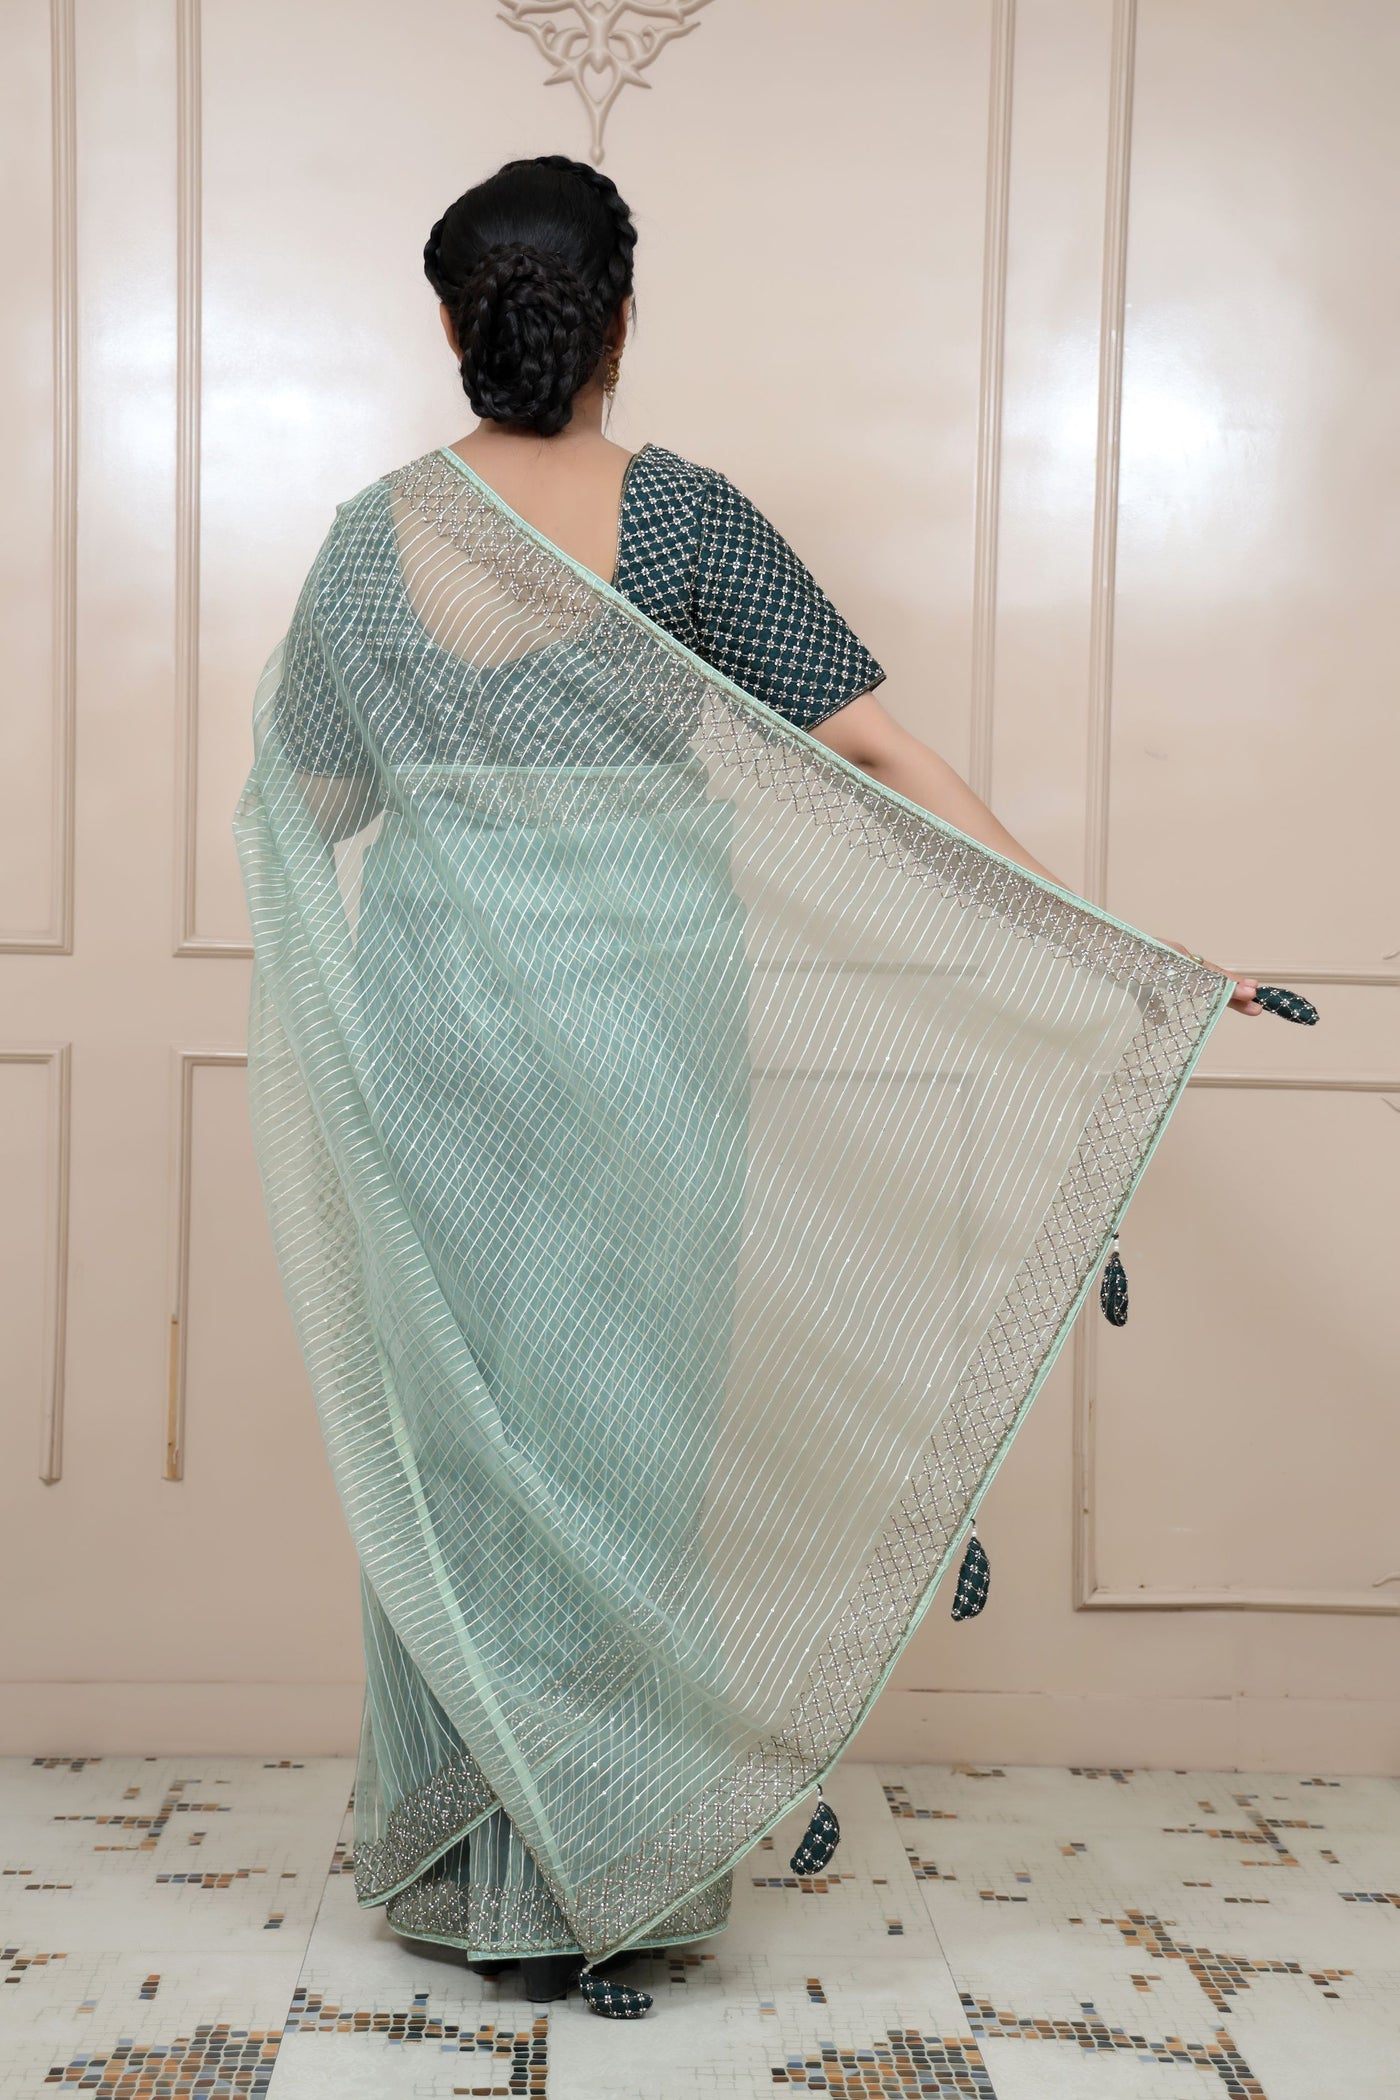 Classy aqua color geometrical motif embroidered saree